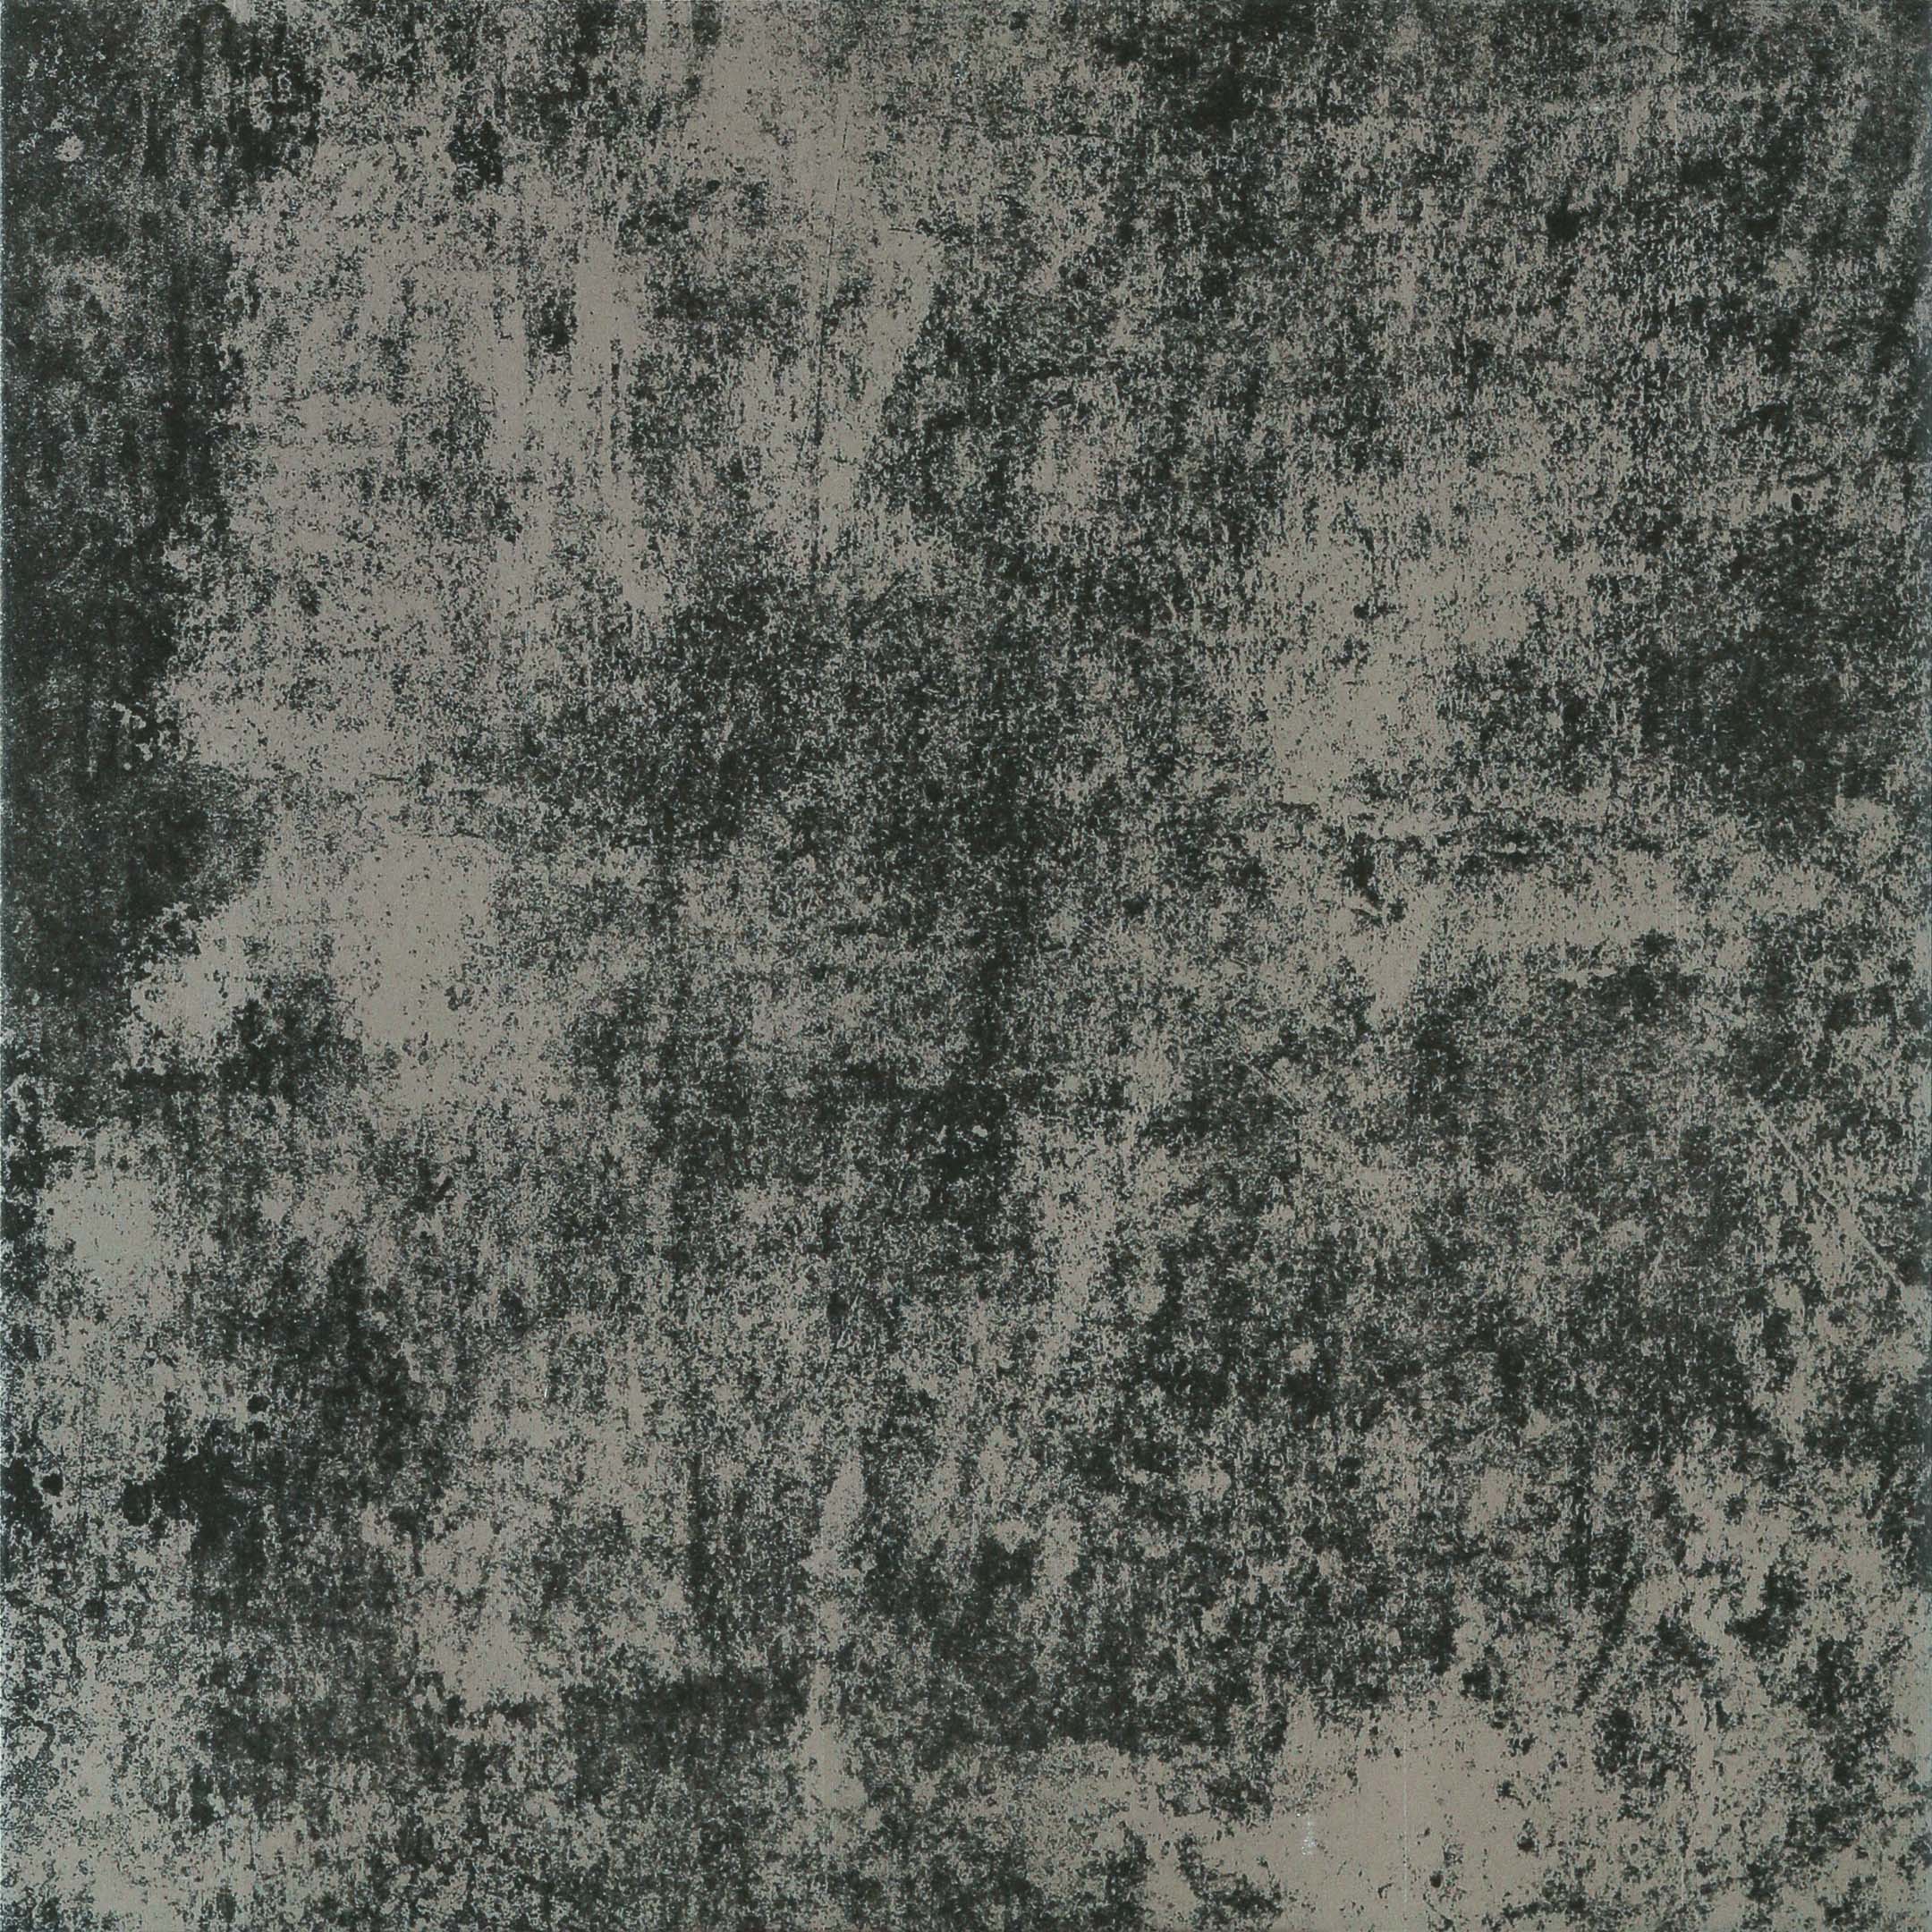 фото Керамогранит керамин нью-йорк 1п серый 400x400x8 мм (11 шт.=1,76 кв.м.)